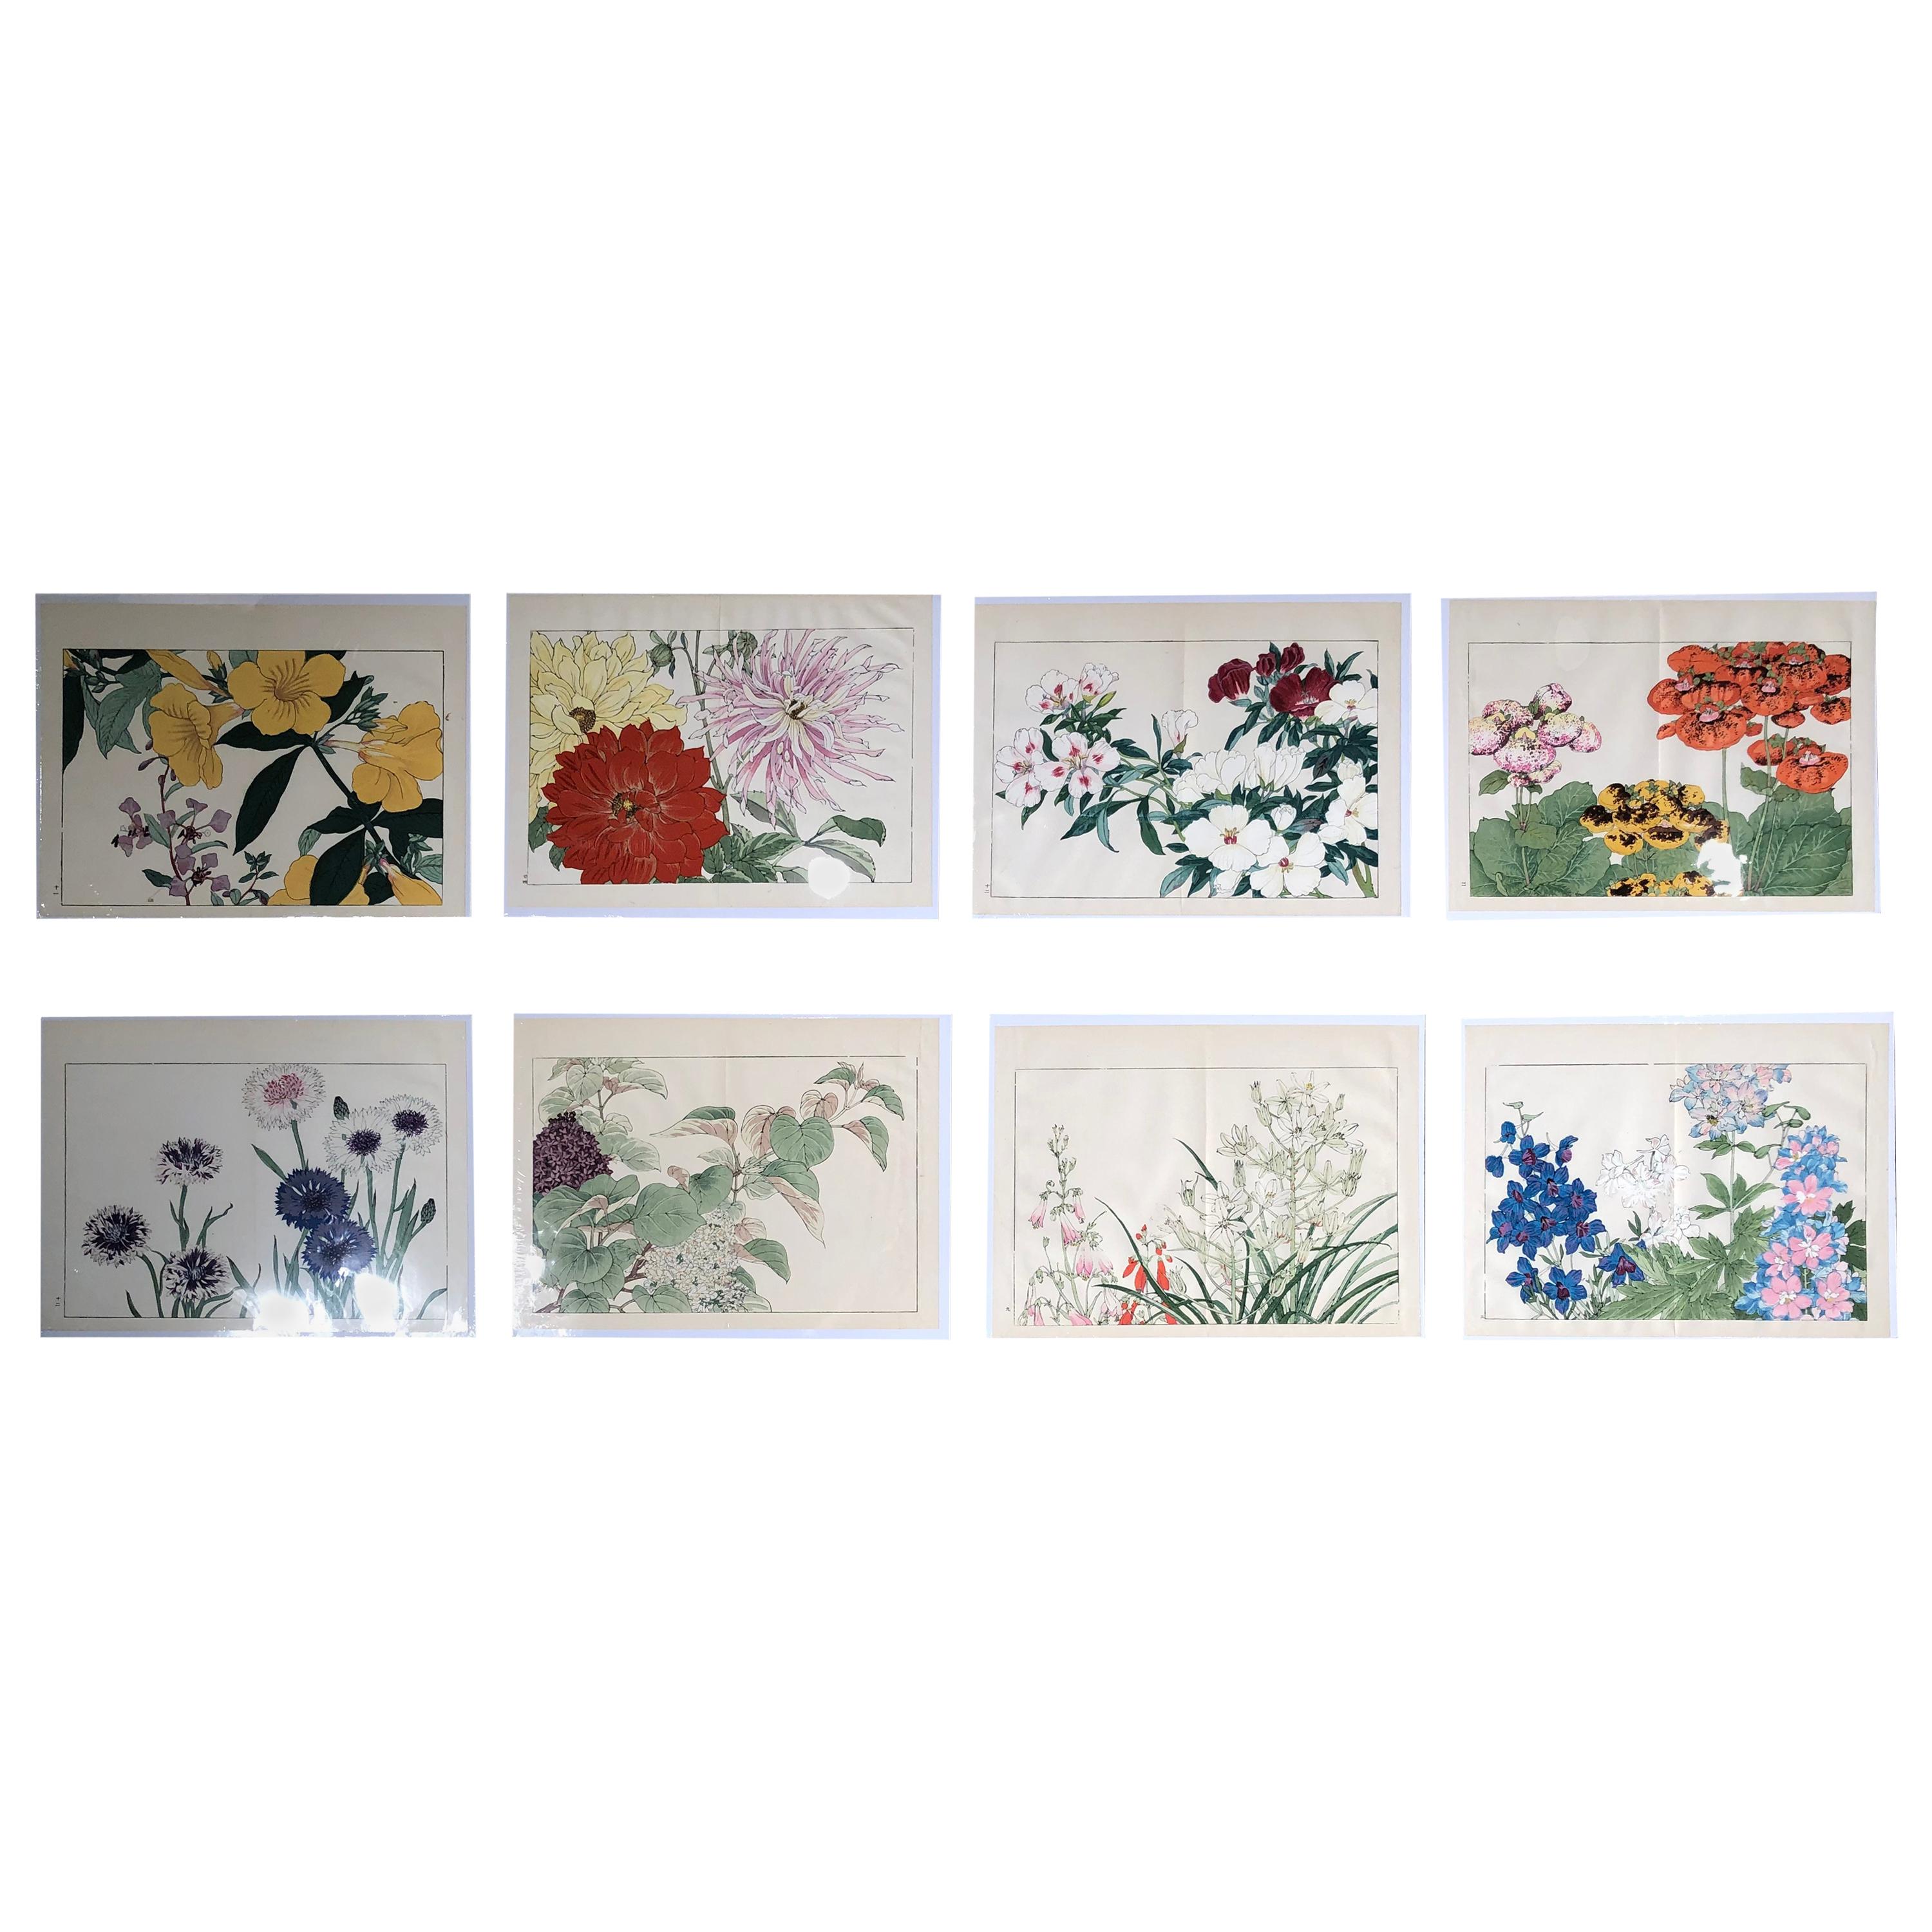 Japanese Eight Old Woodblock Flower Prints, Full Colors, Immediately Frameable#1